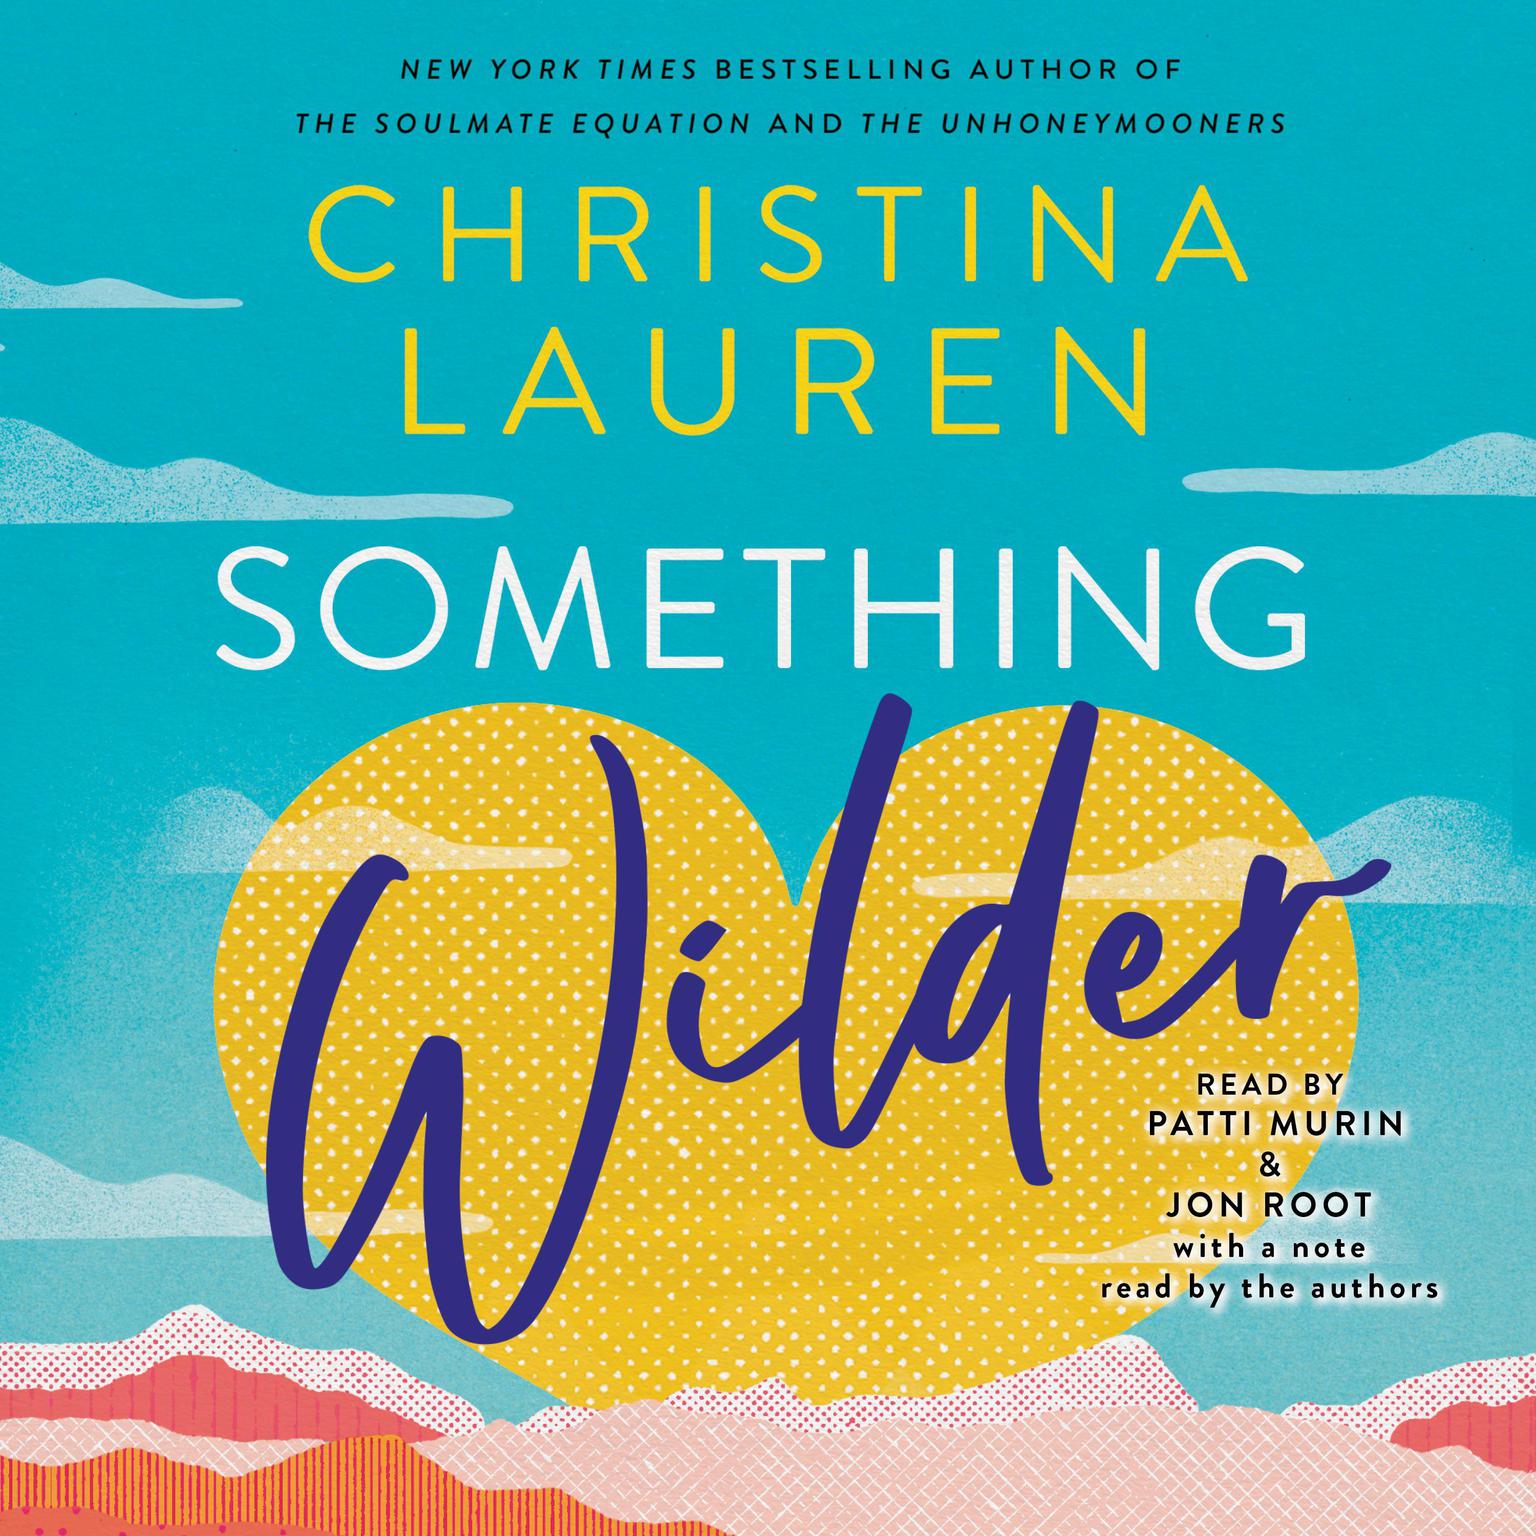 Christina Lauren: Something Wilder (AudiobookFormat, 2022, Simon & Schuster Audio and Blackstone Publishing)